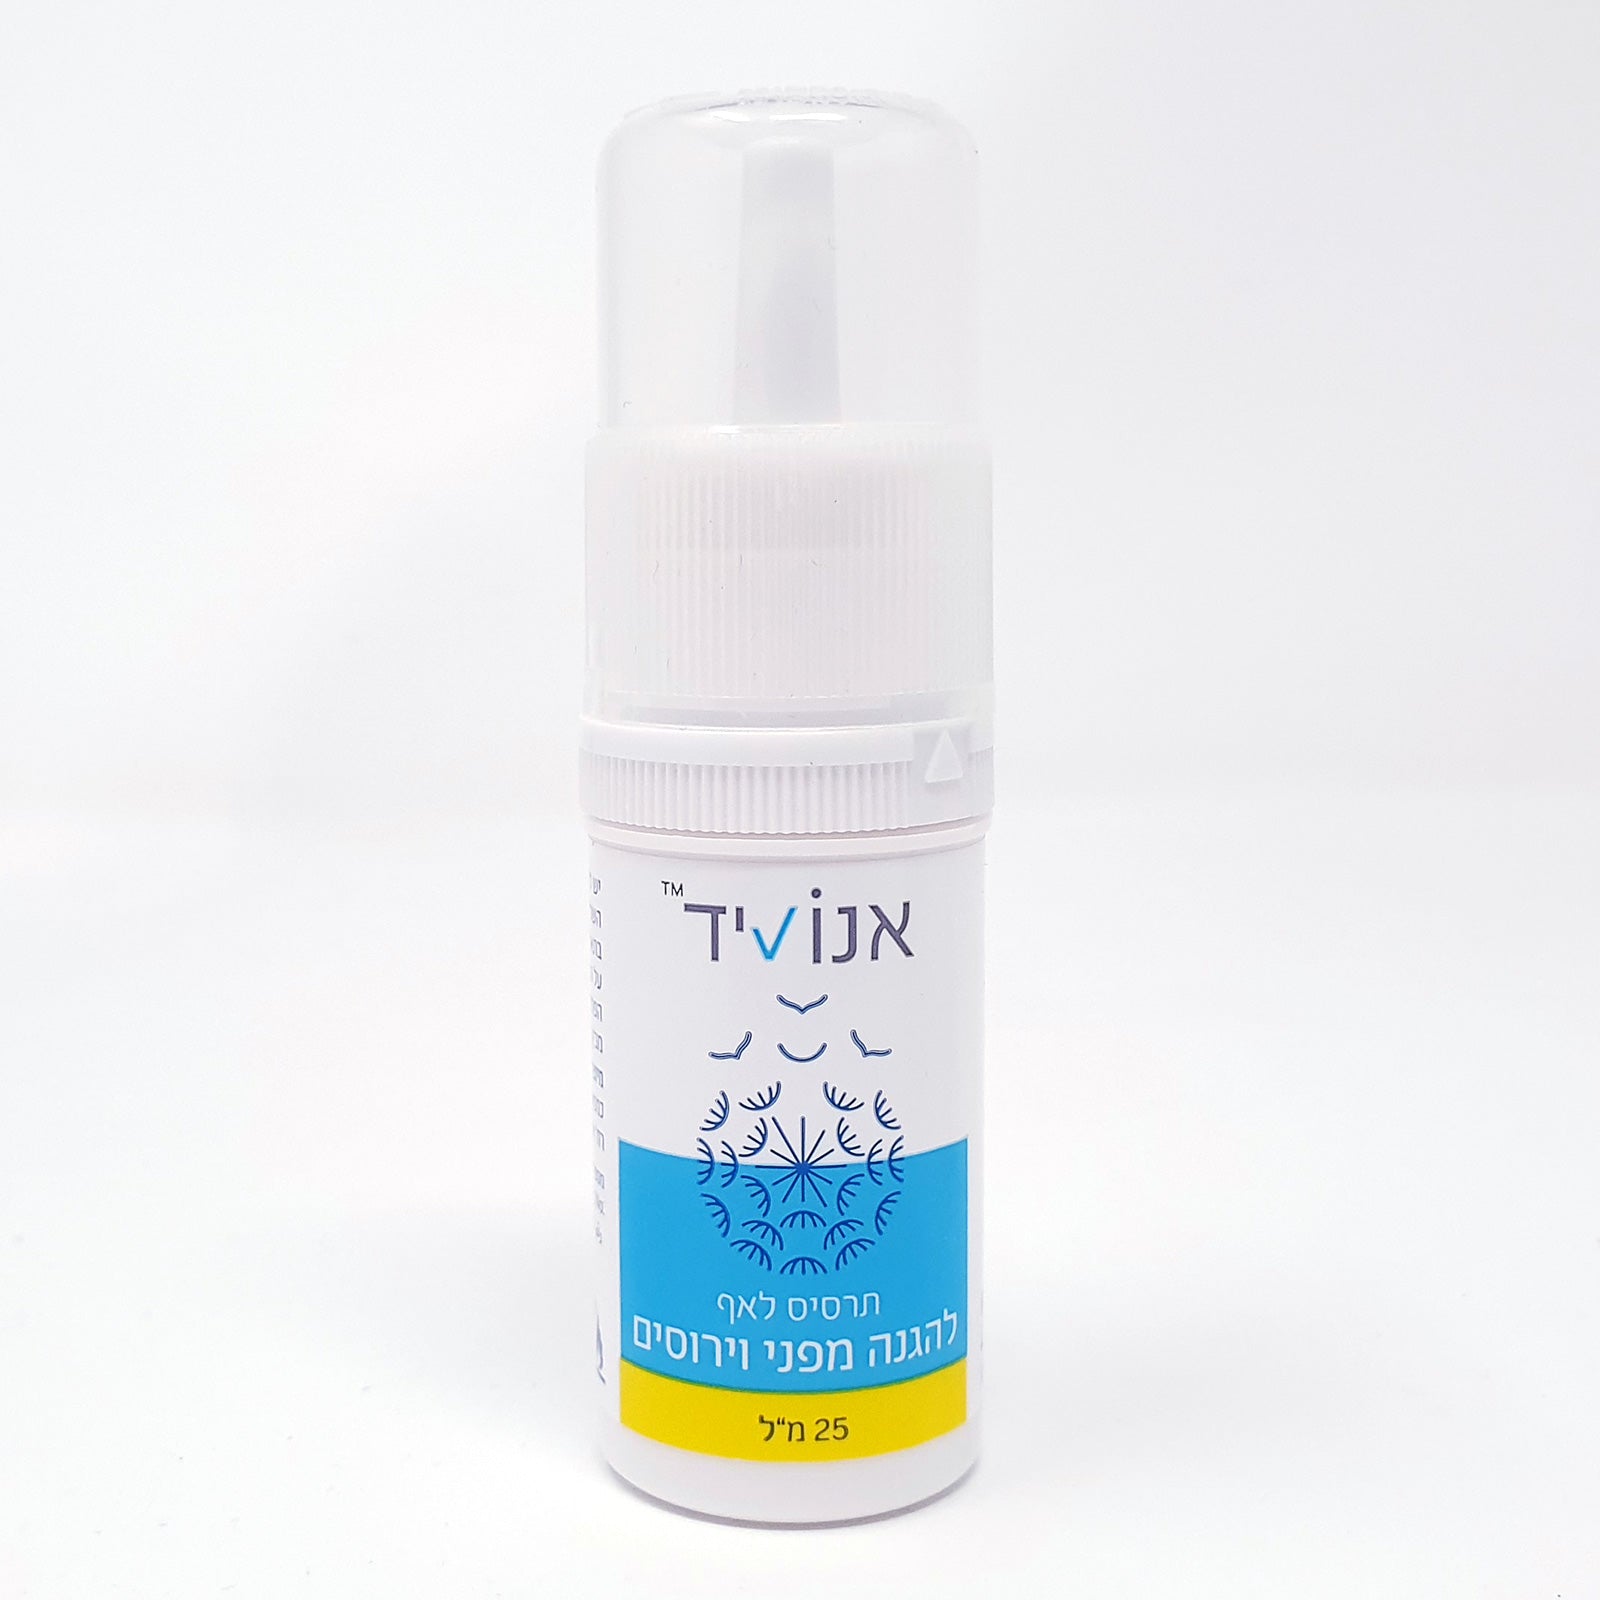 Special Offer! 5-PACK Enovid SaNOtize Nitric Oxide Nasal Spray (NONS)